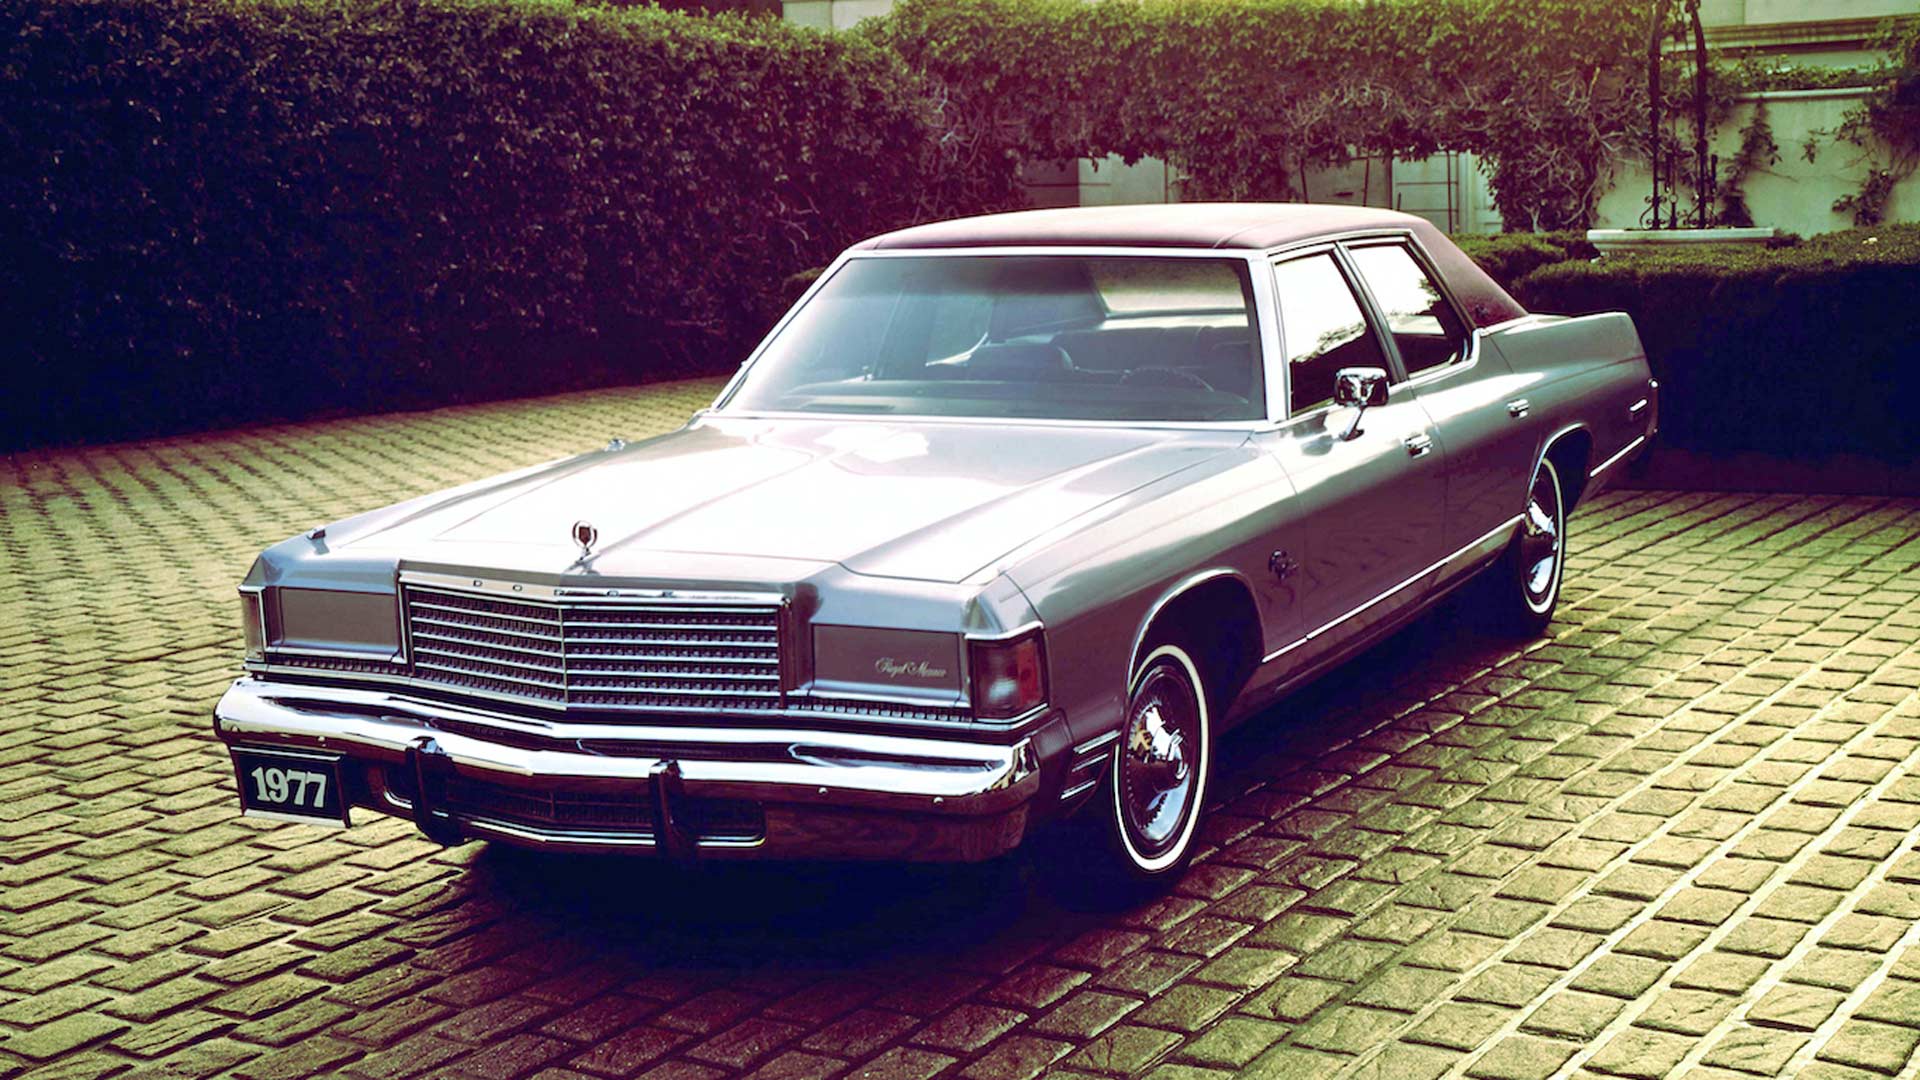 1977 Dodge Royal Monaco – 225.7 inches